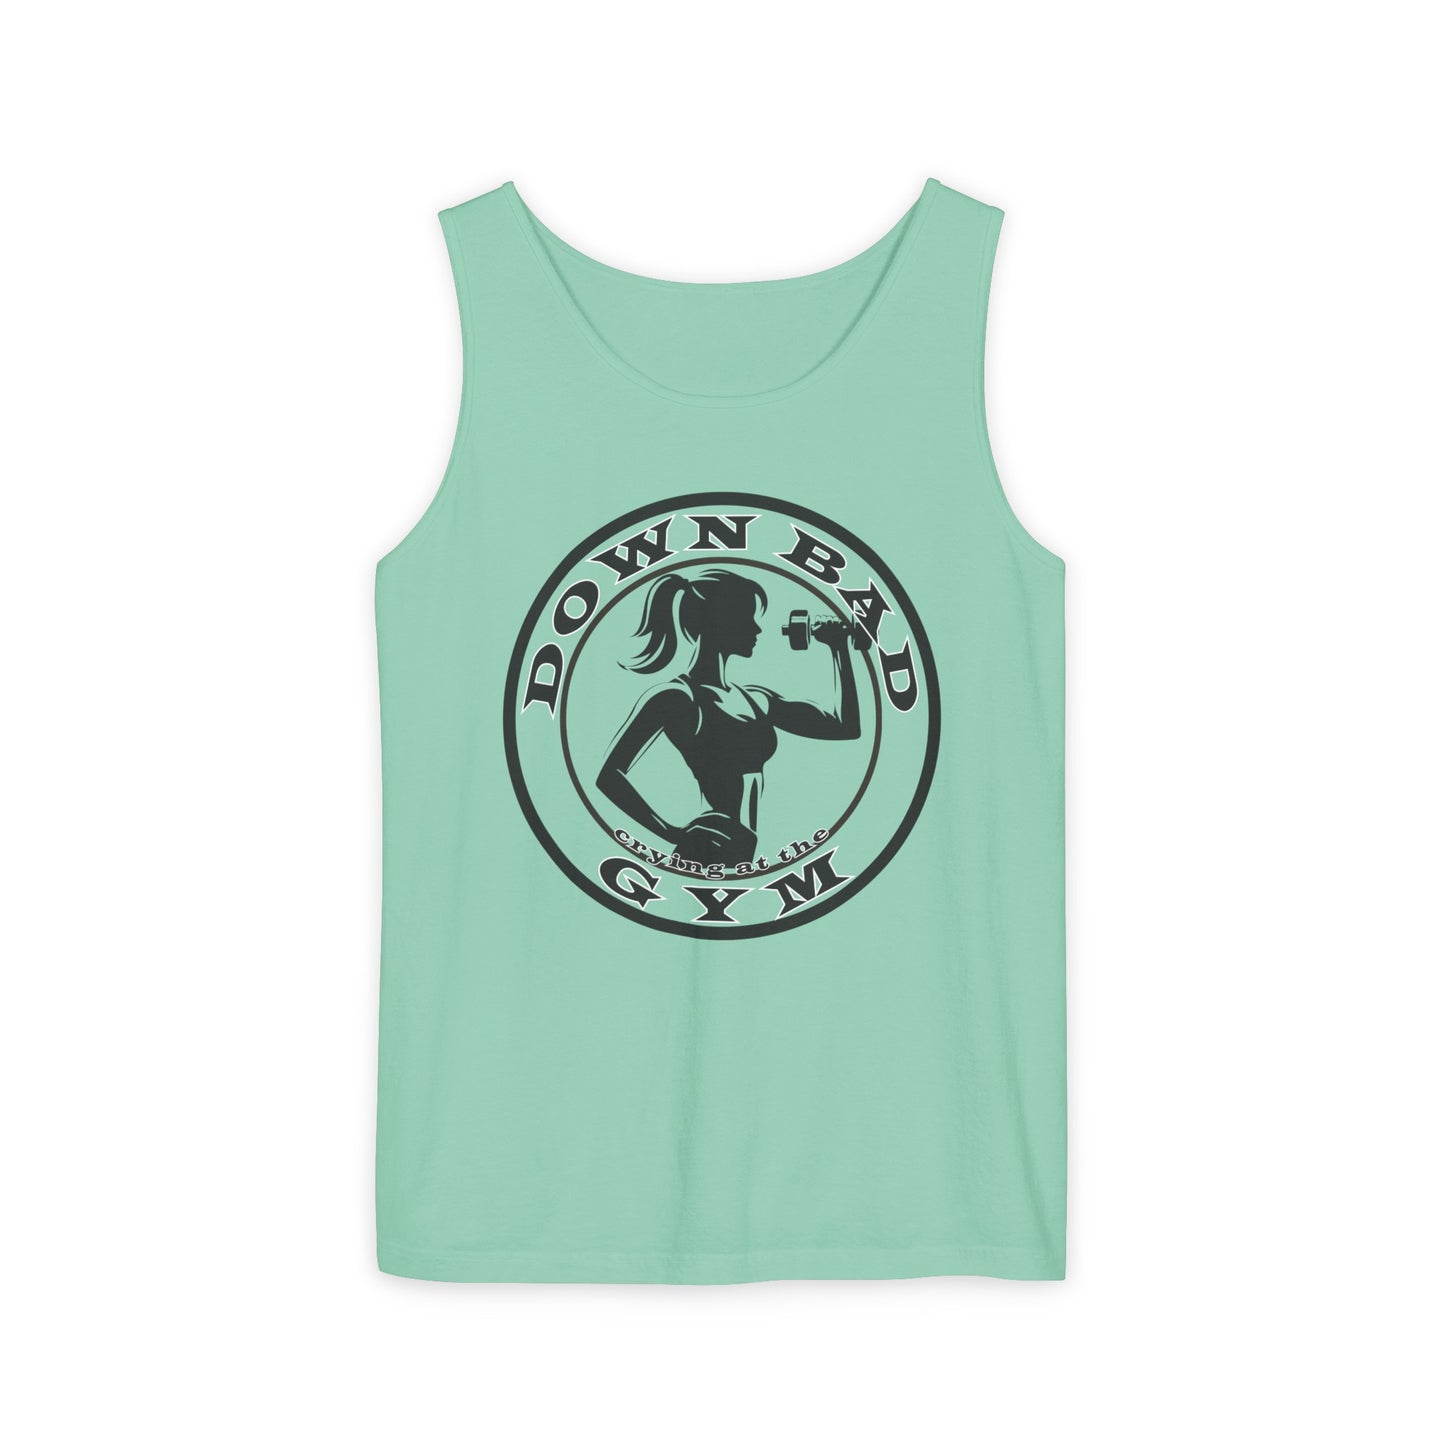 Down Bad Vintage Gym Logo Garment-Dyed Sleeveless Tank Top